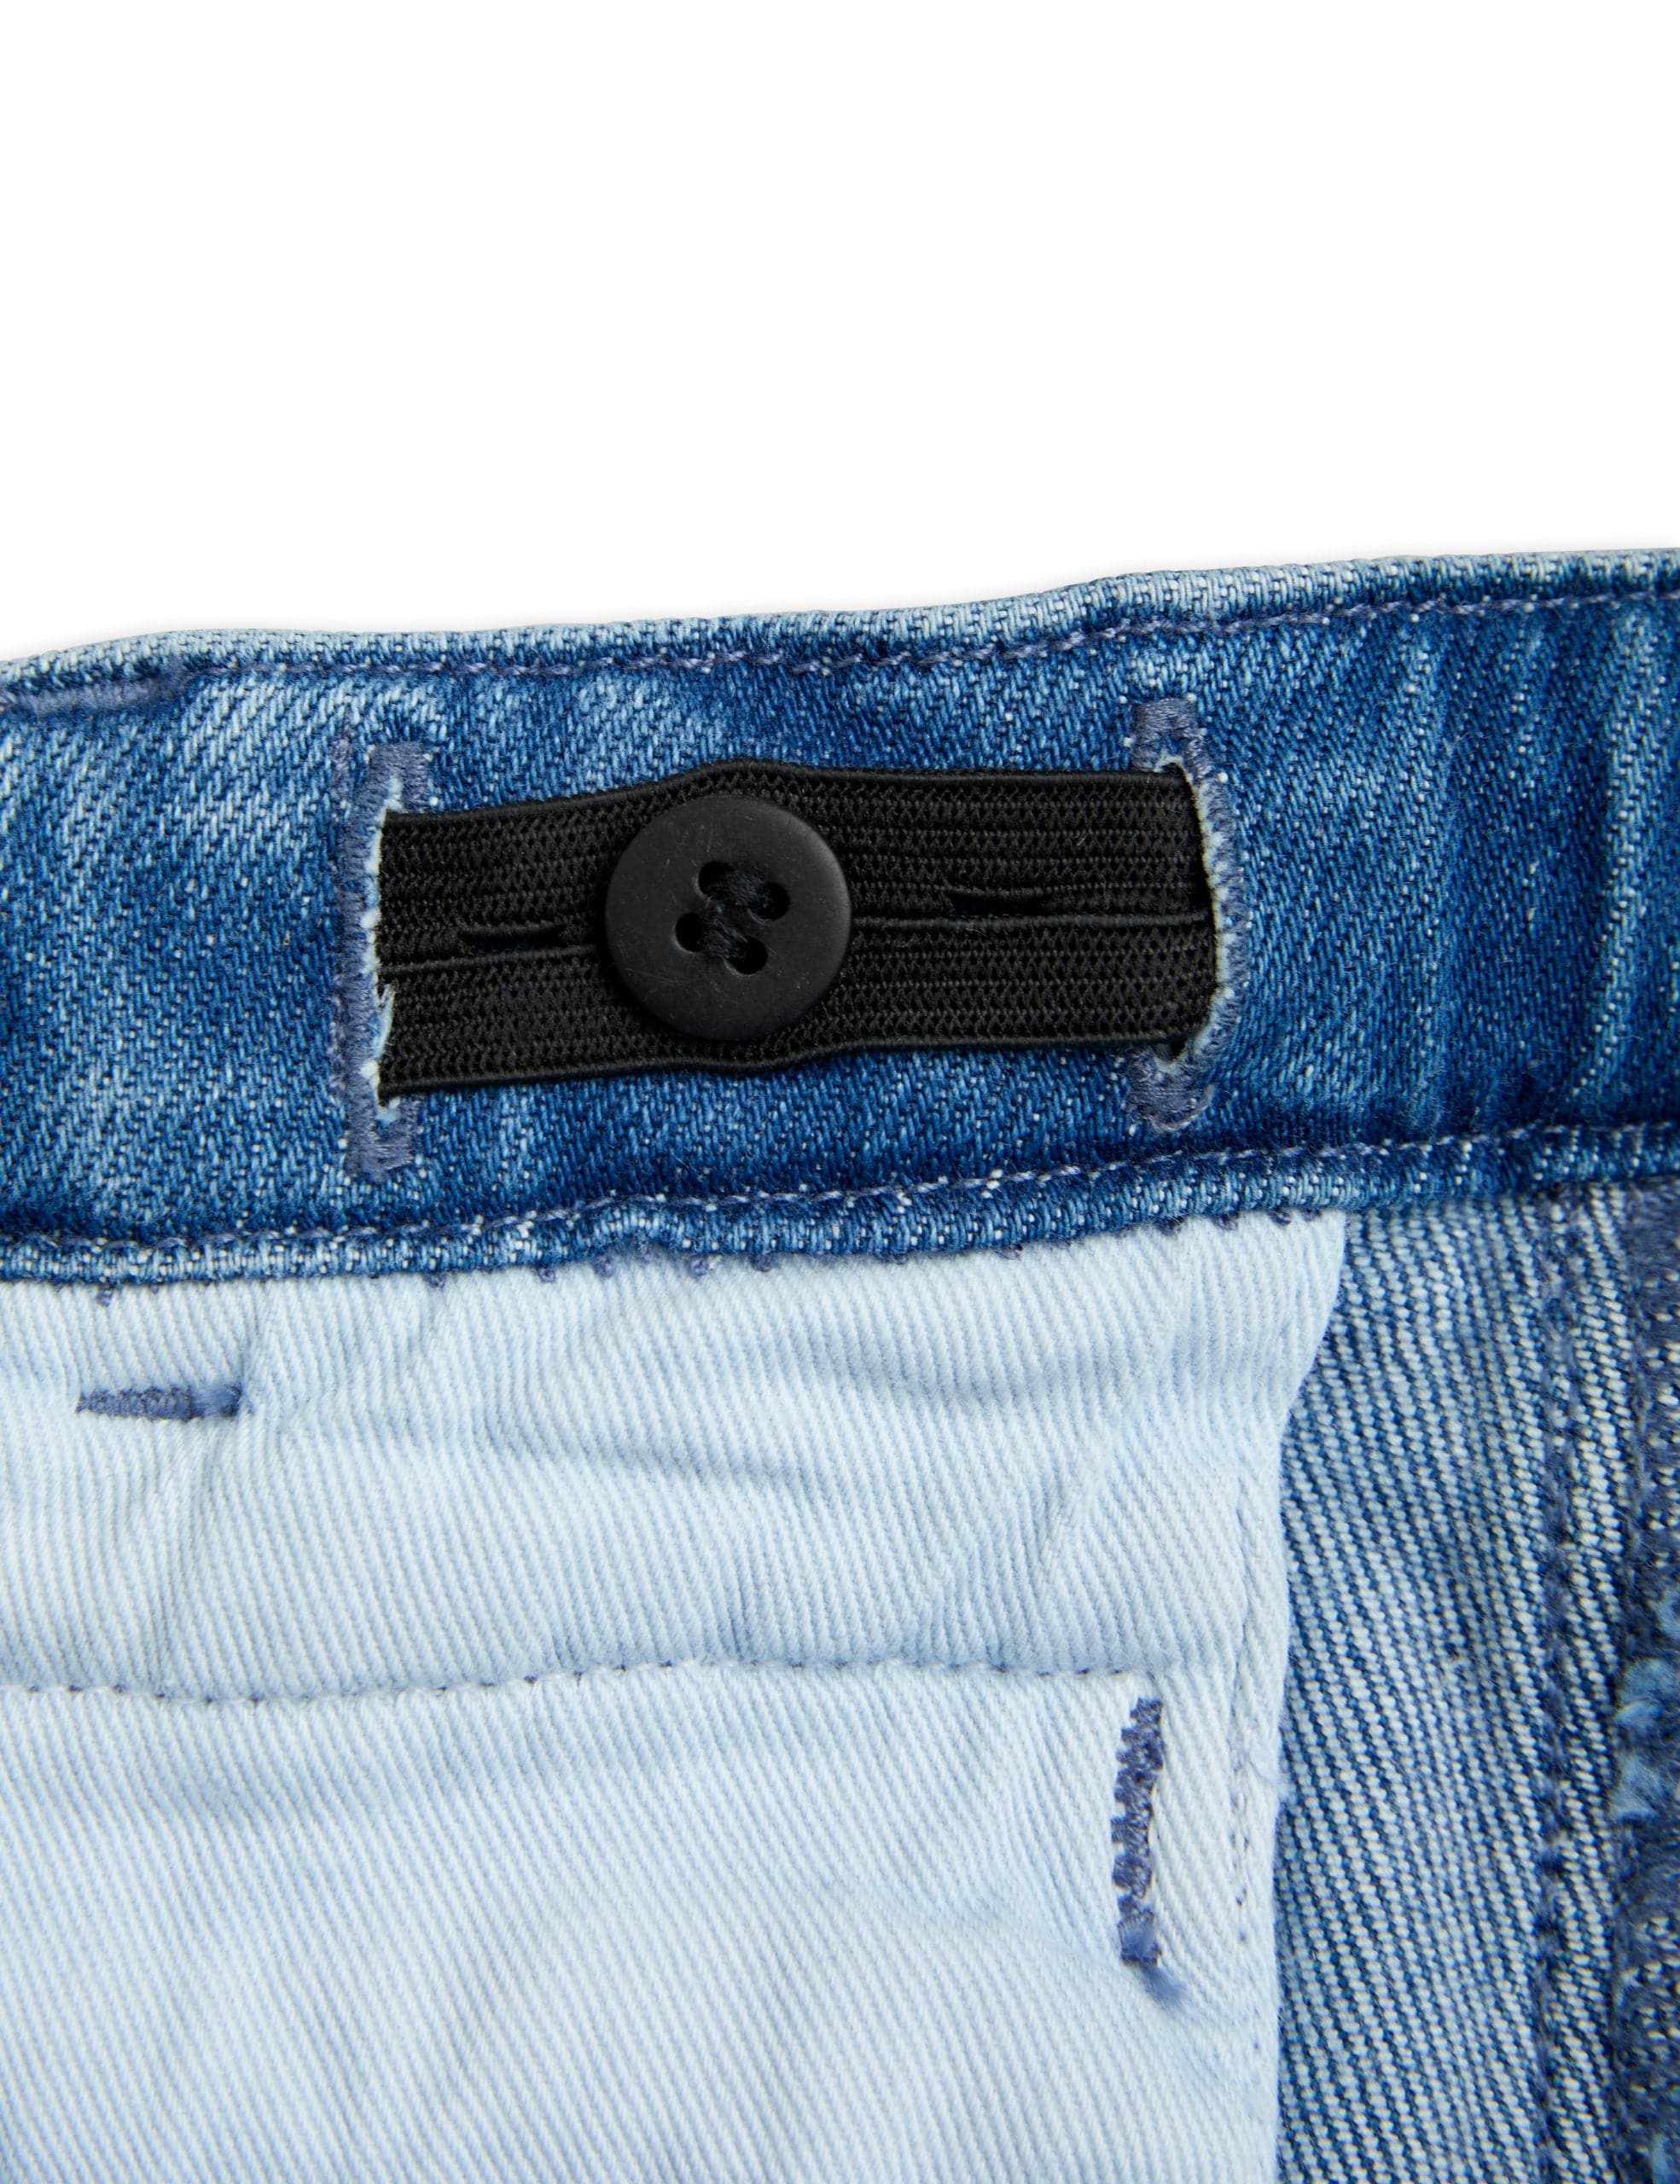 Mini Rodini | Frisco flared denim jeans